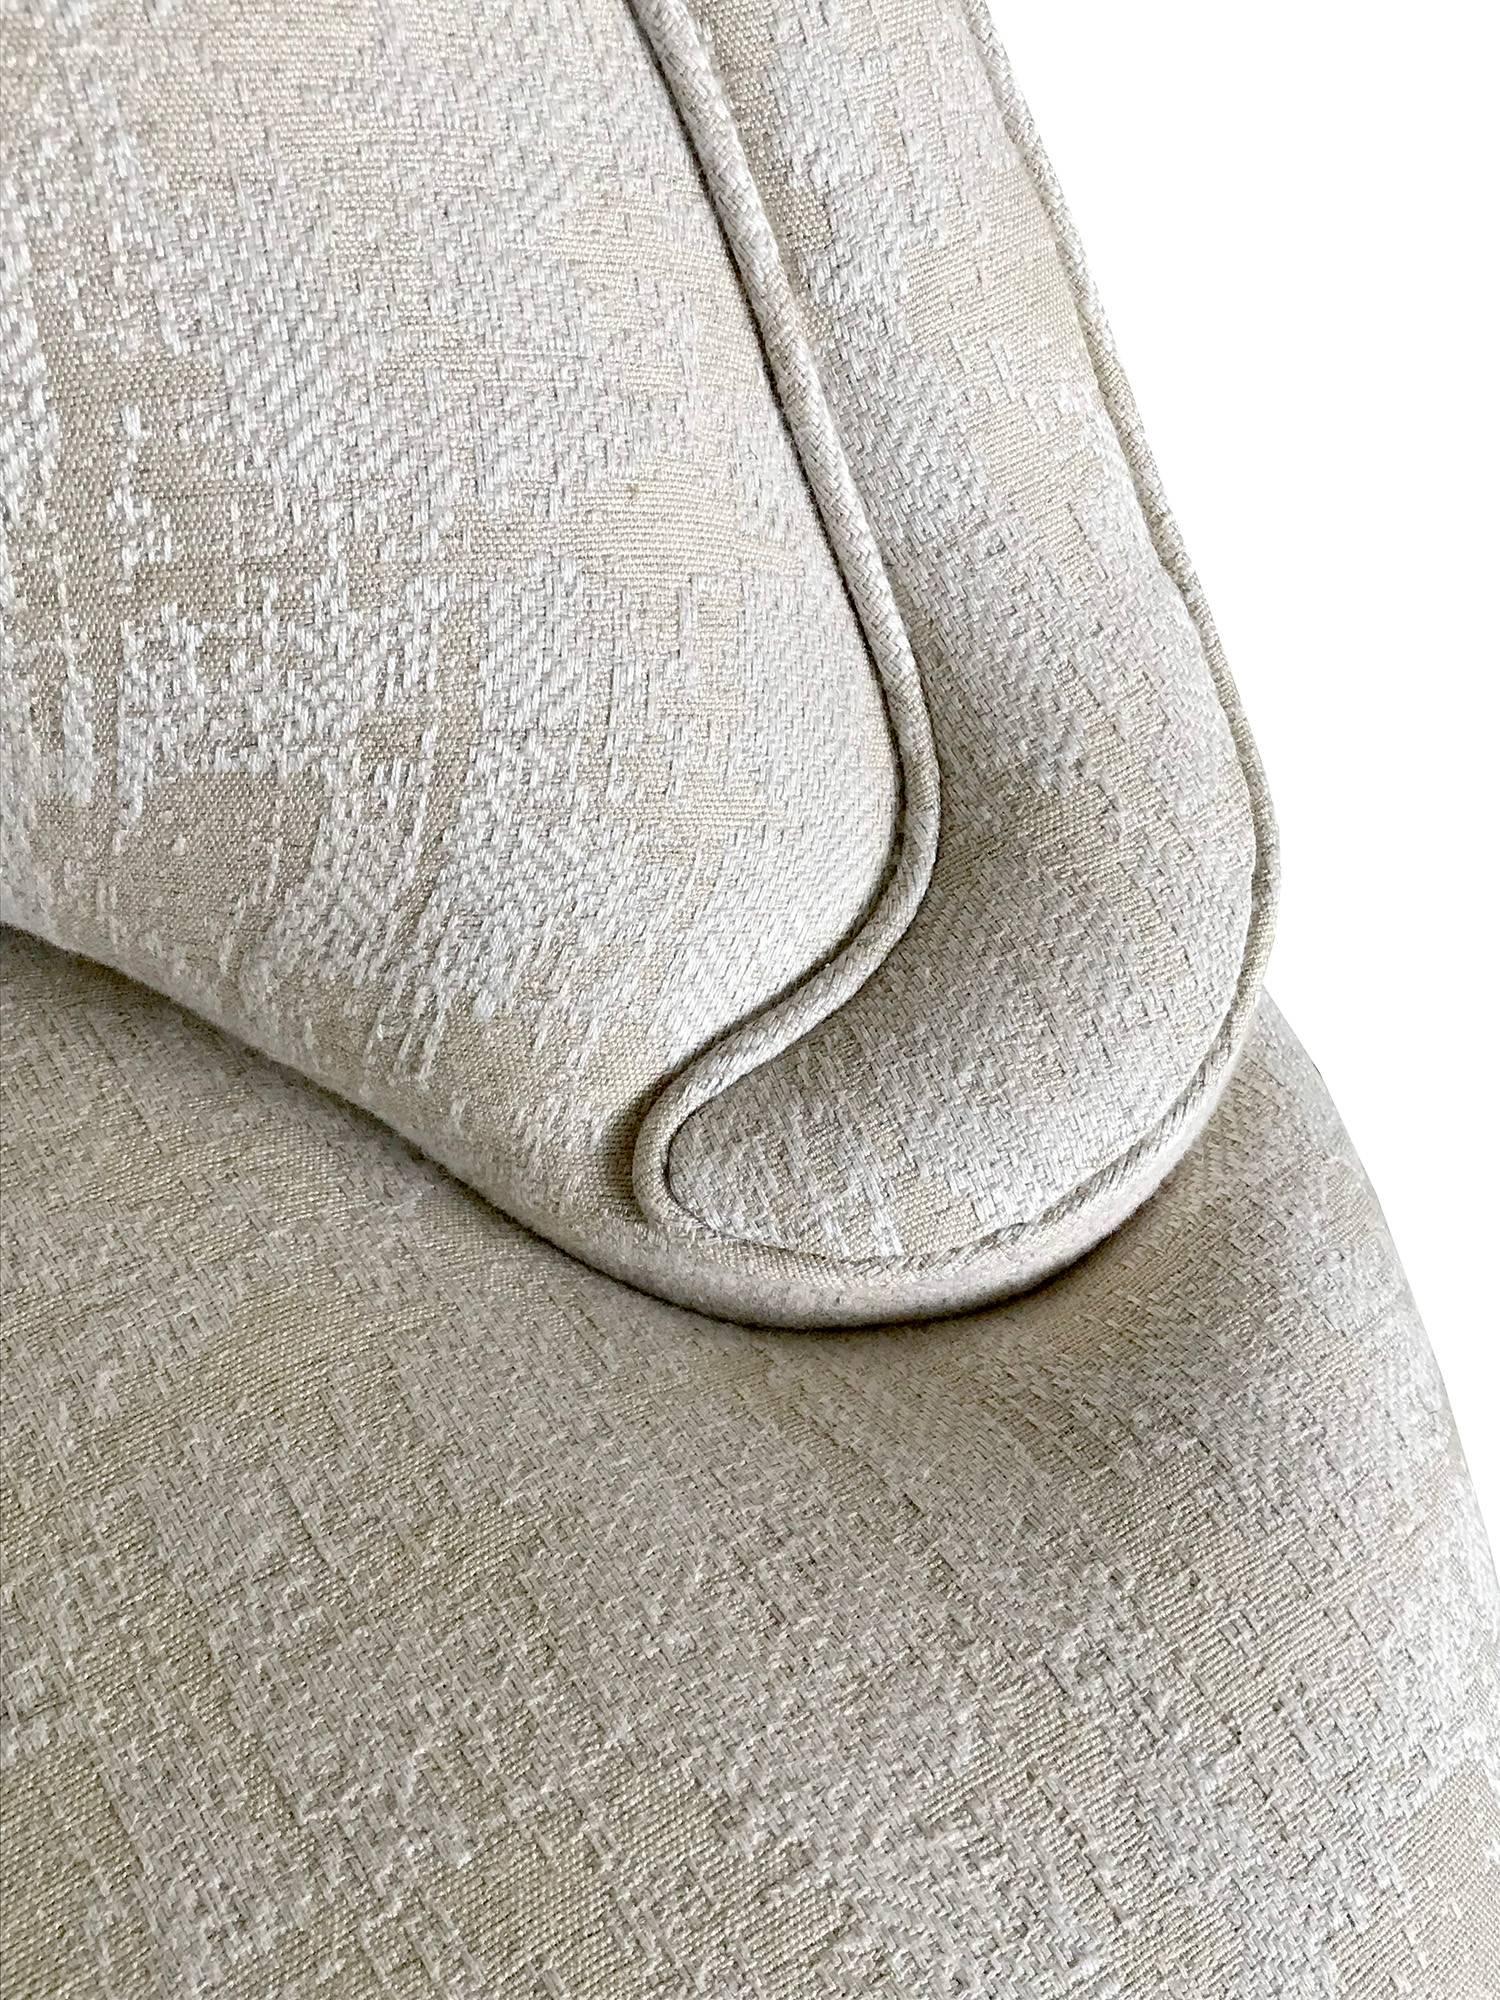 Contemporary Schiaparelli Sofa by Michael Taylor Design